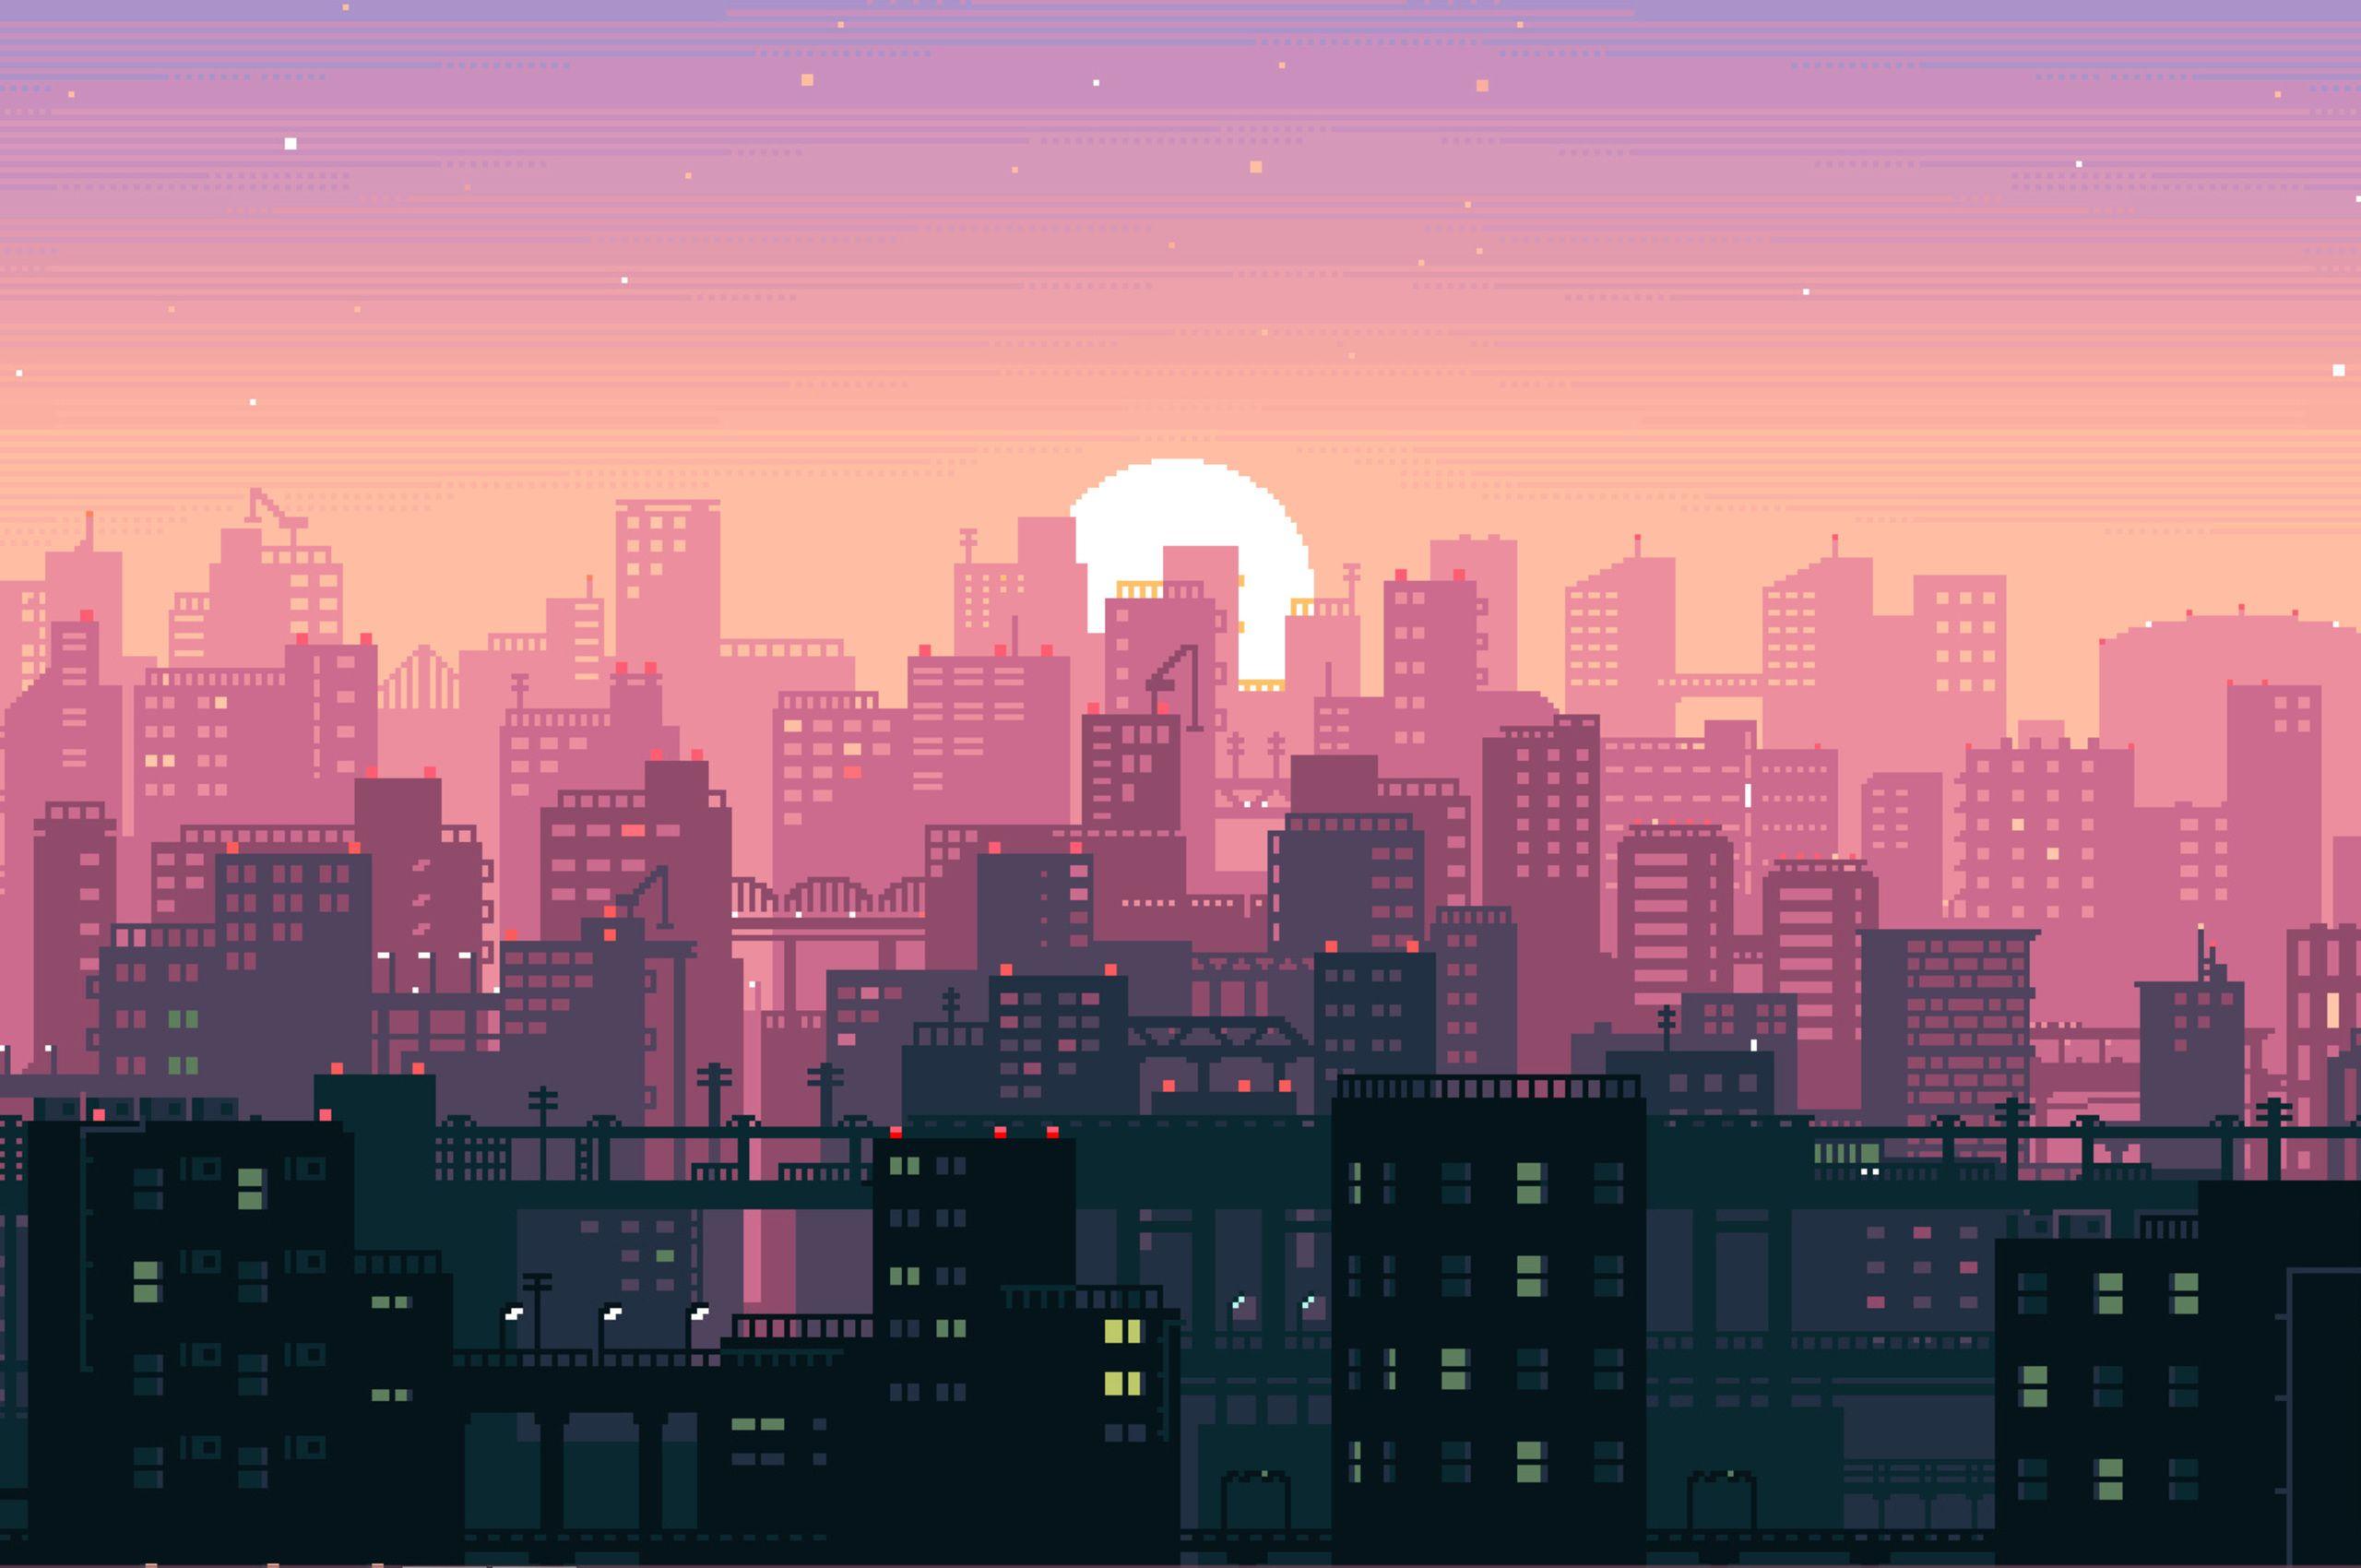 8 Bit Sunset [2560x1700]. Pixel Art Background, Aesthetic